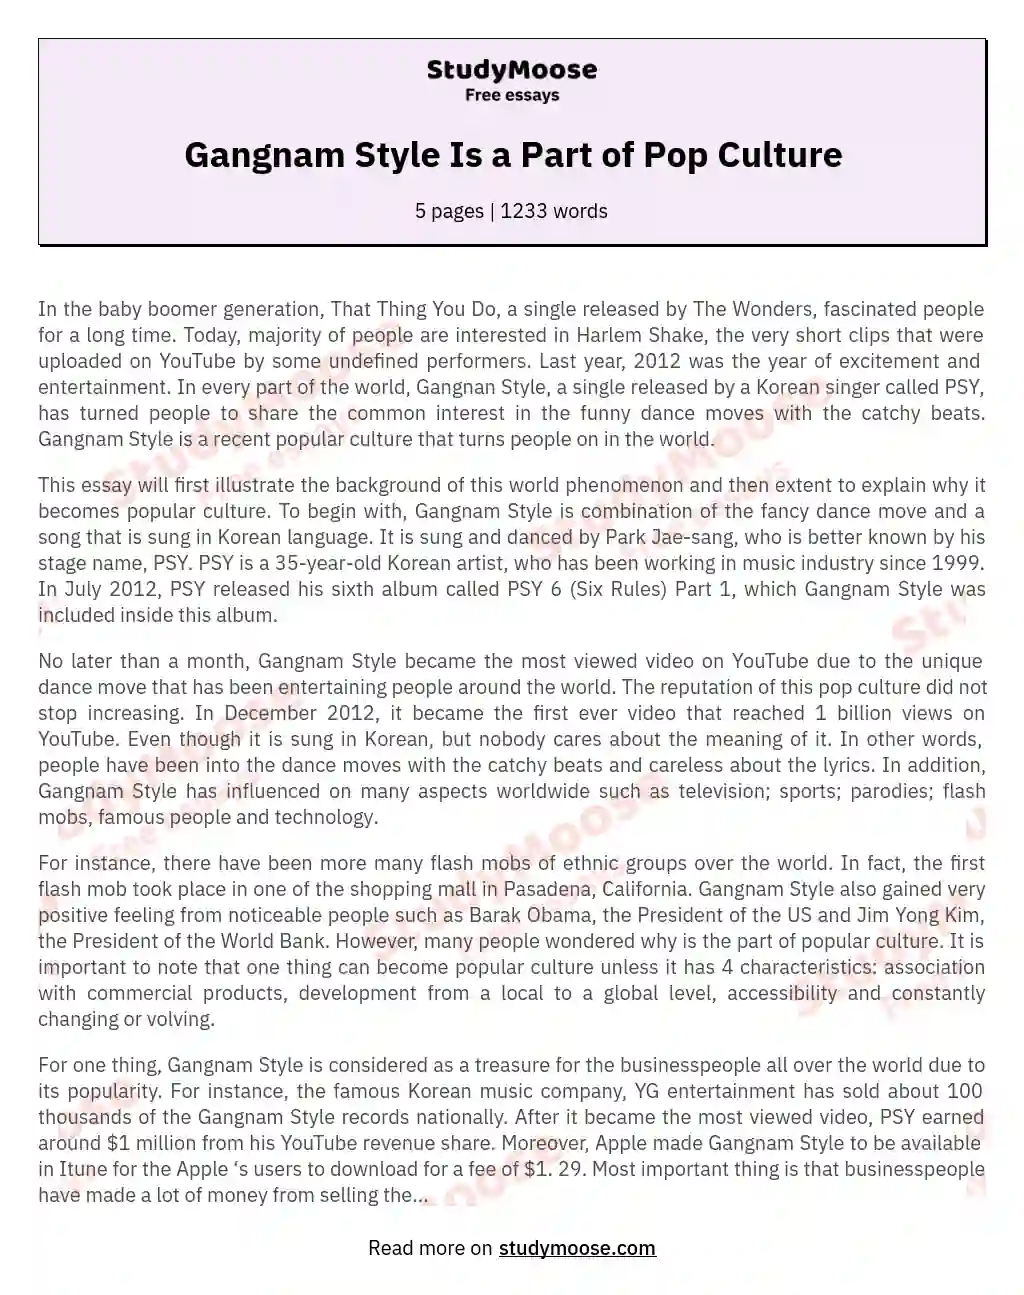 The Global Phenomenon of Gangnam Style essay